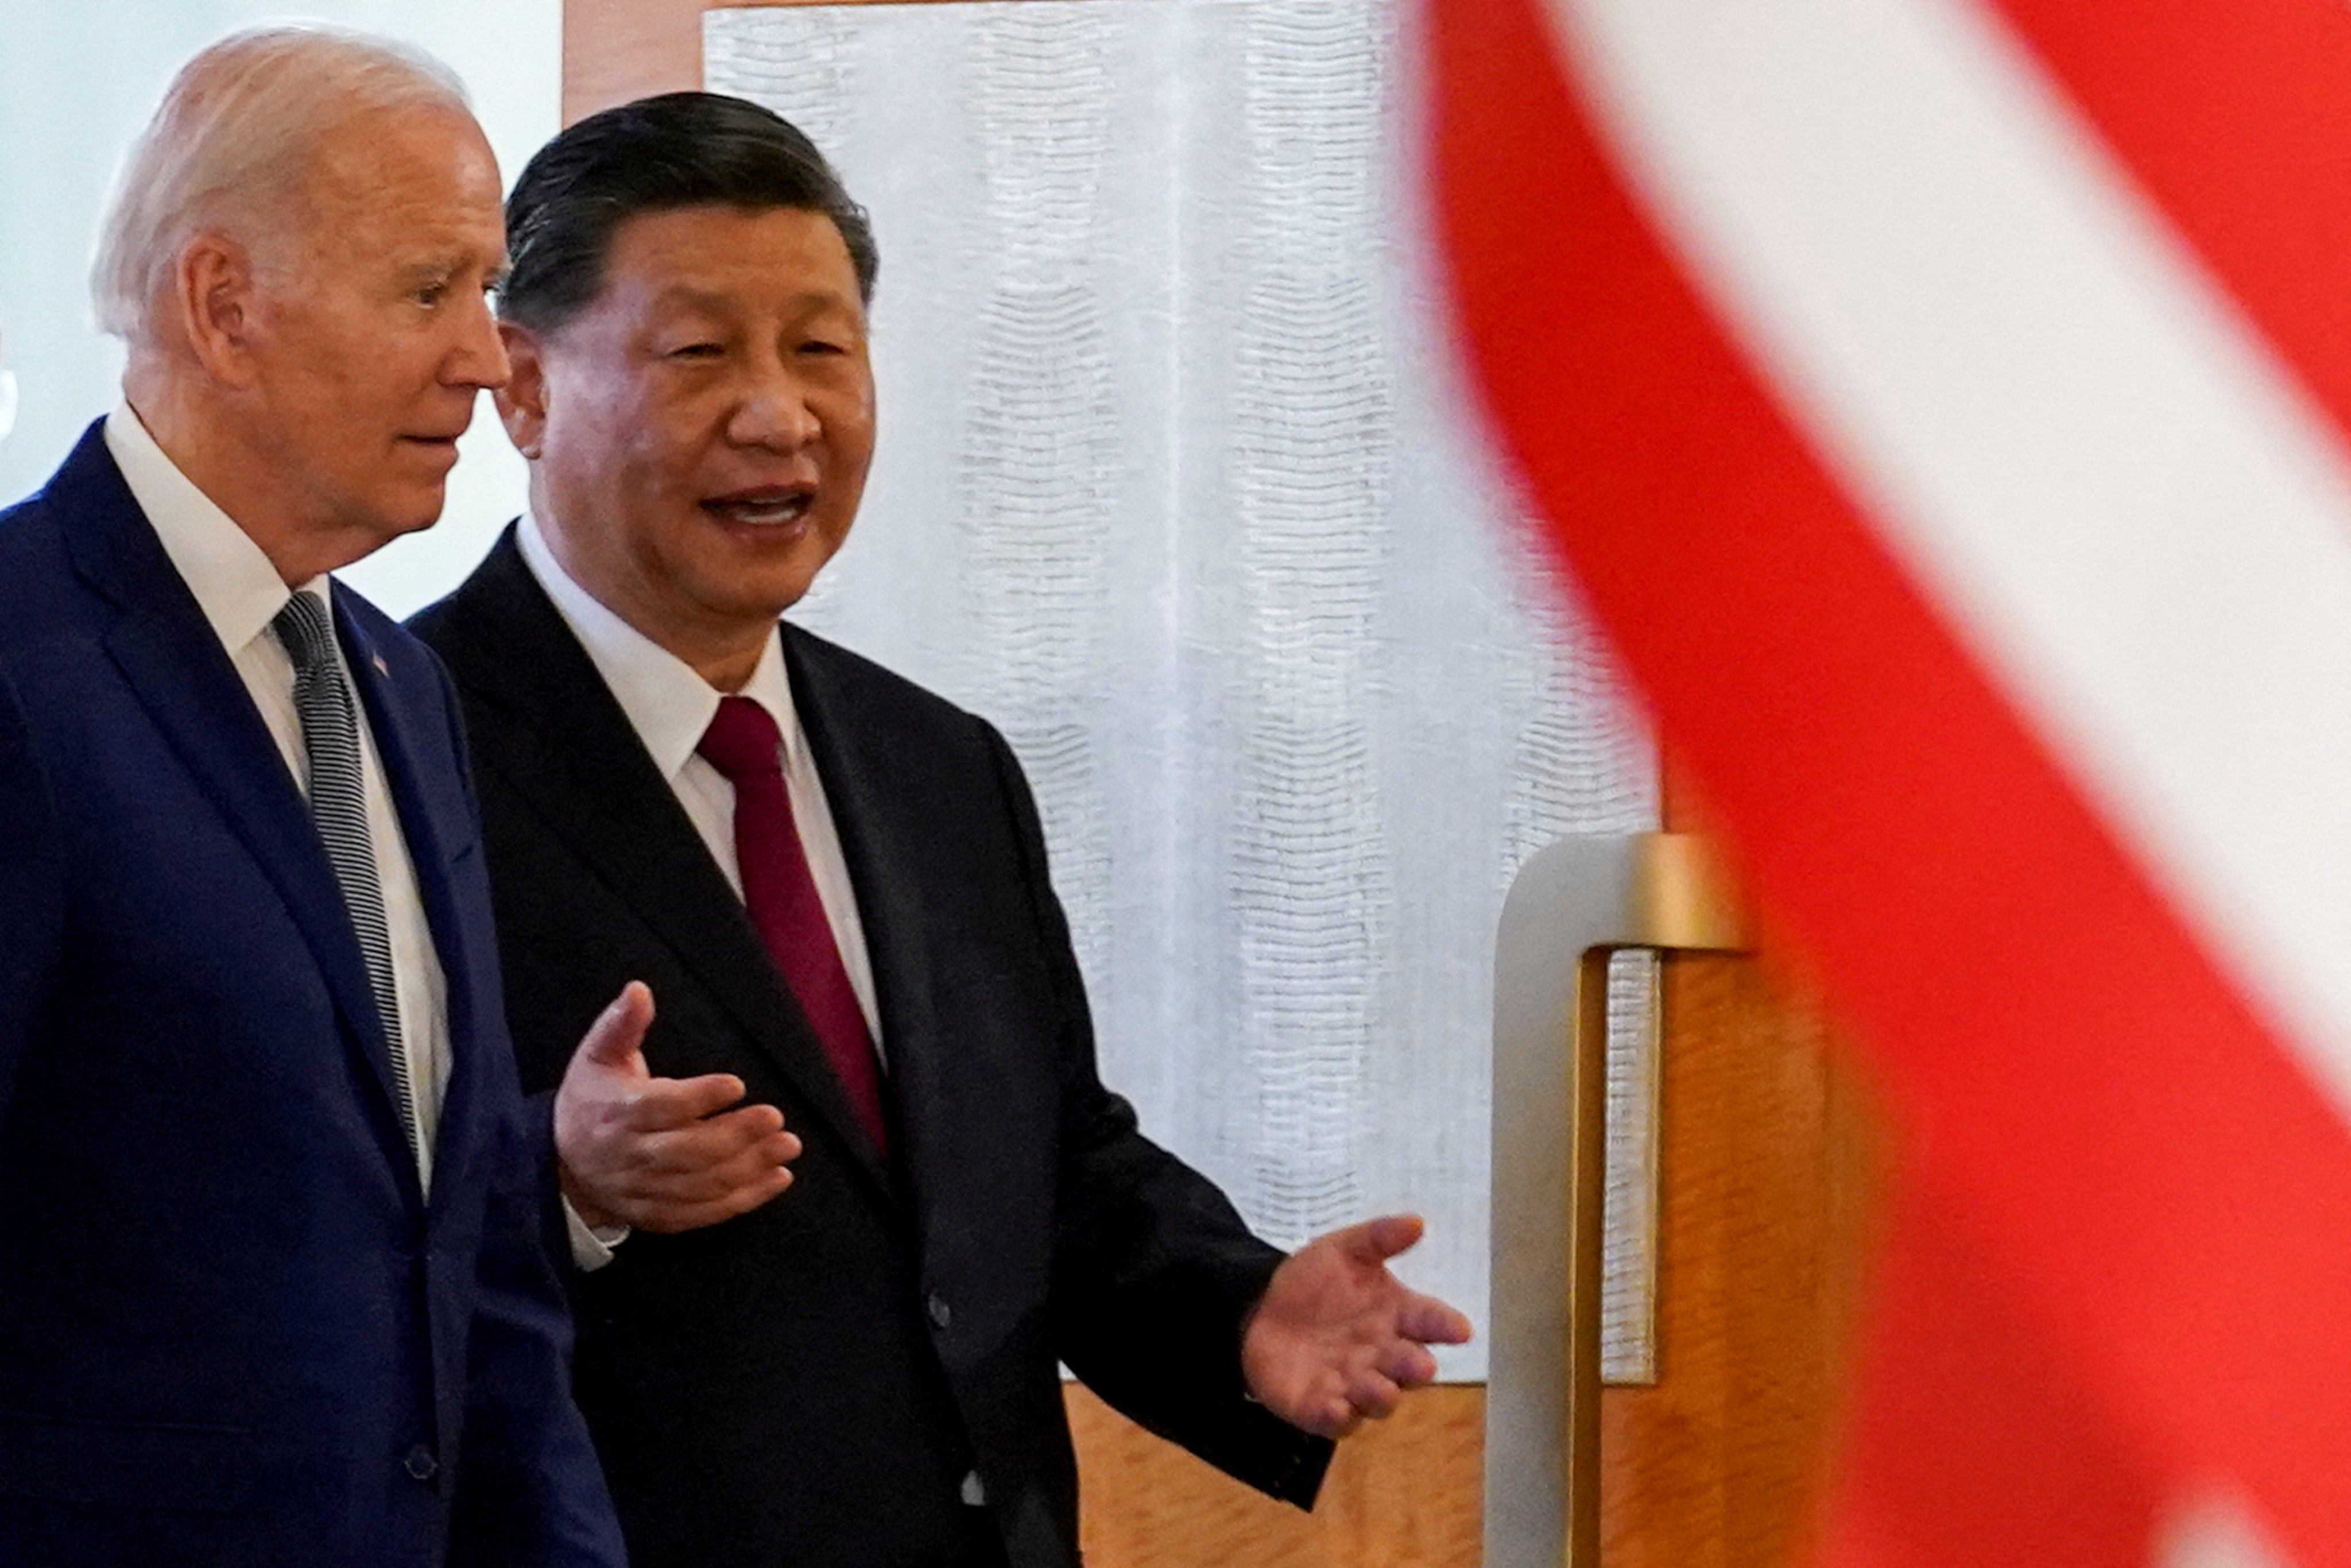 US President Joe Biden last met Chinese President Xi Jinping on the sidelines of the G20 summit in Bali, Indonesia, on November 14 last year. Photo: Reuters